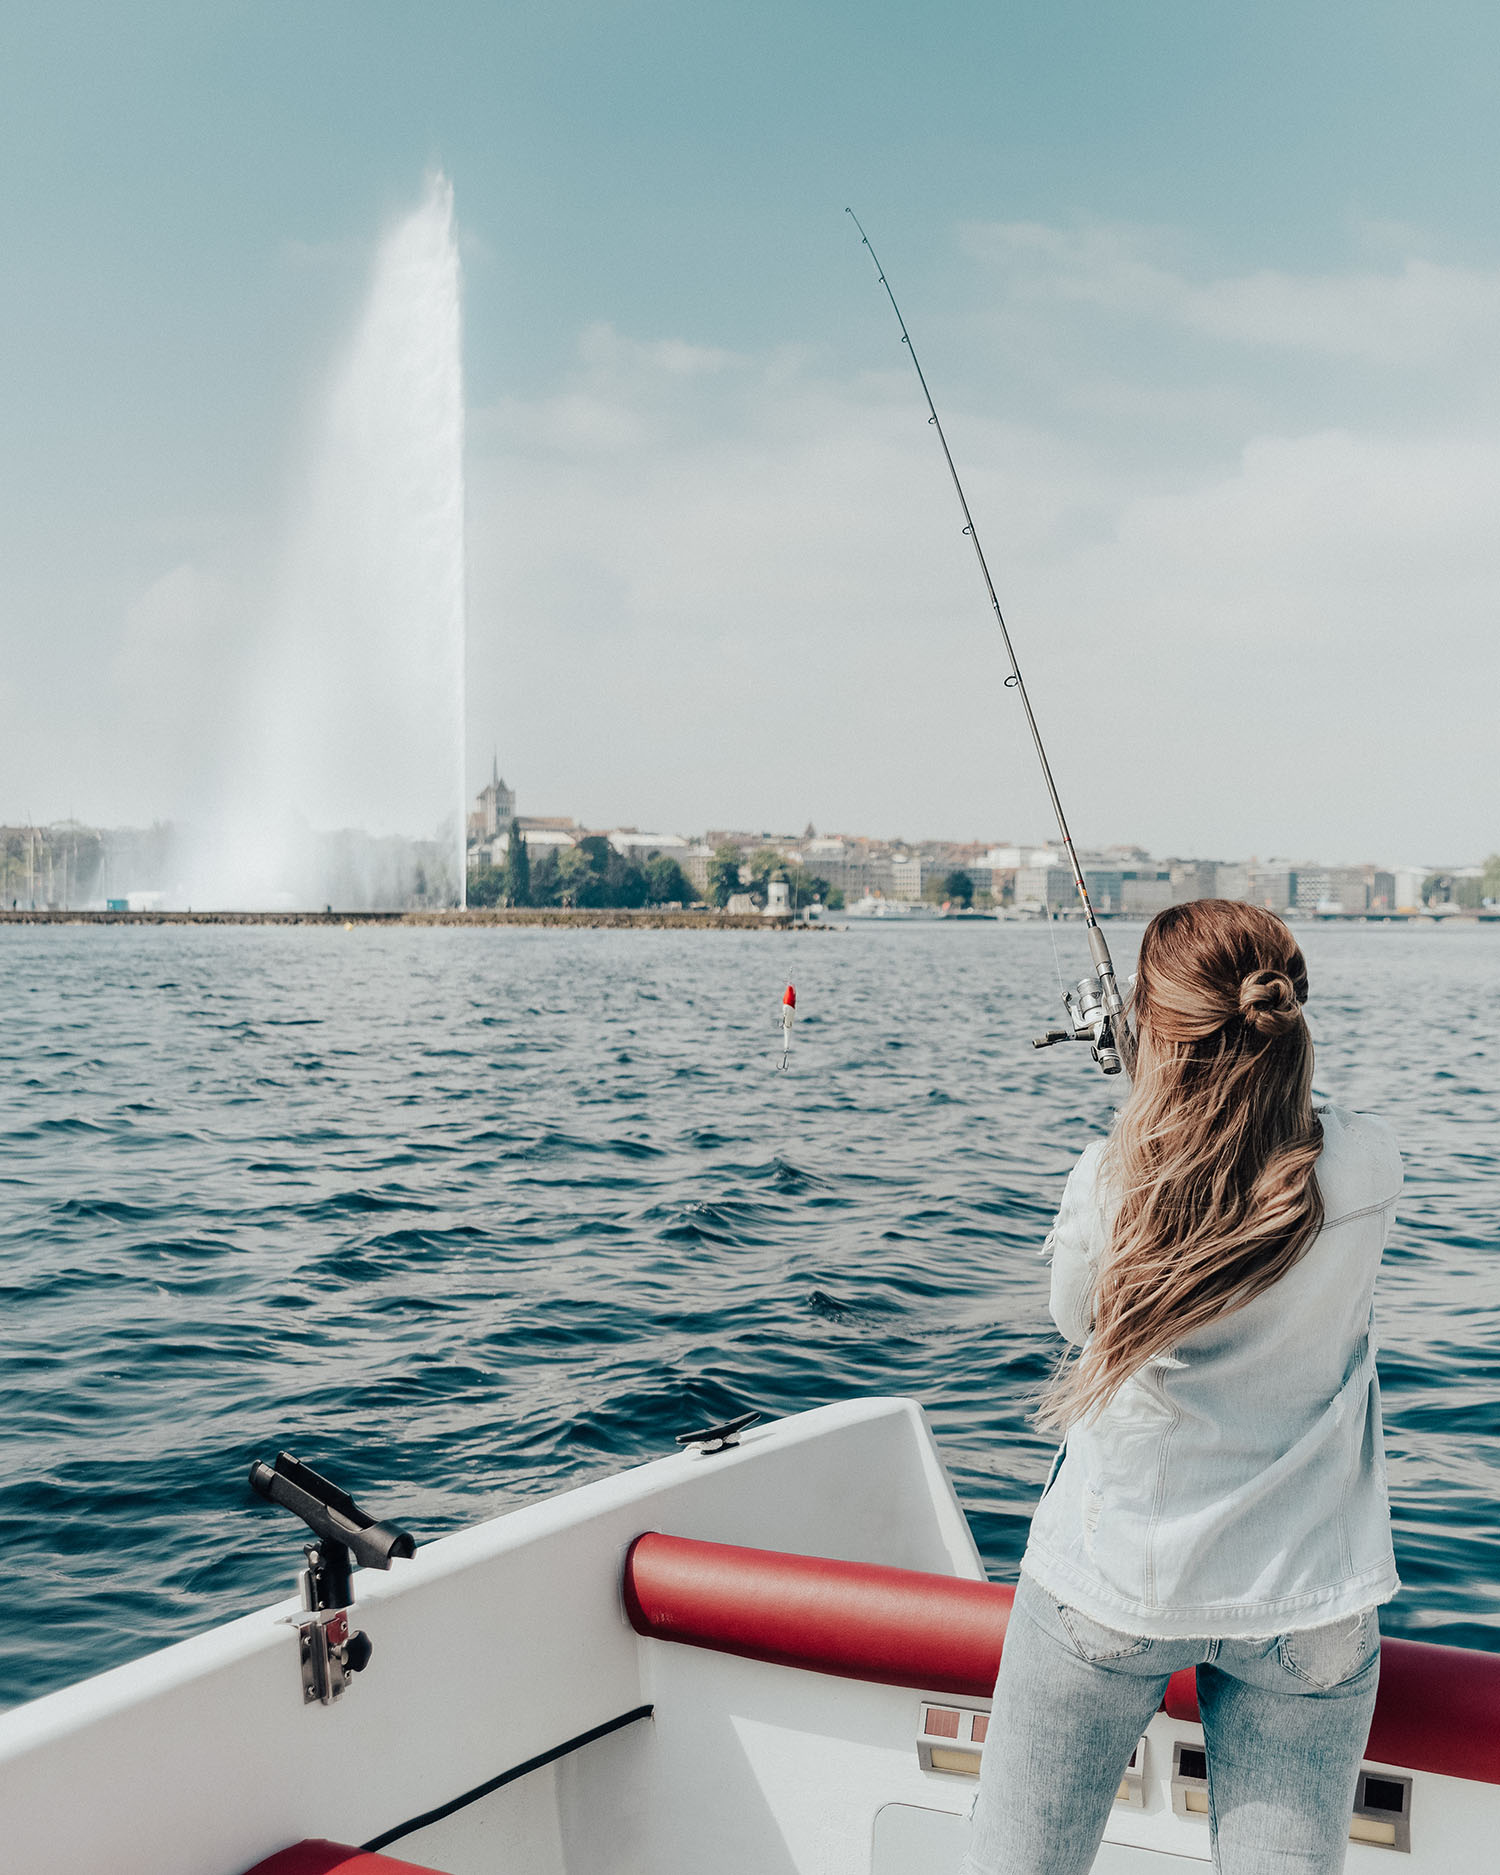 Adaras on a fishing boat trip on Lake Geneva - Jet d'eau in the background